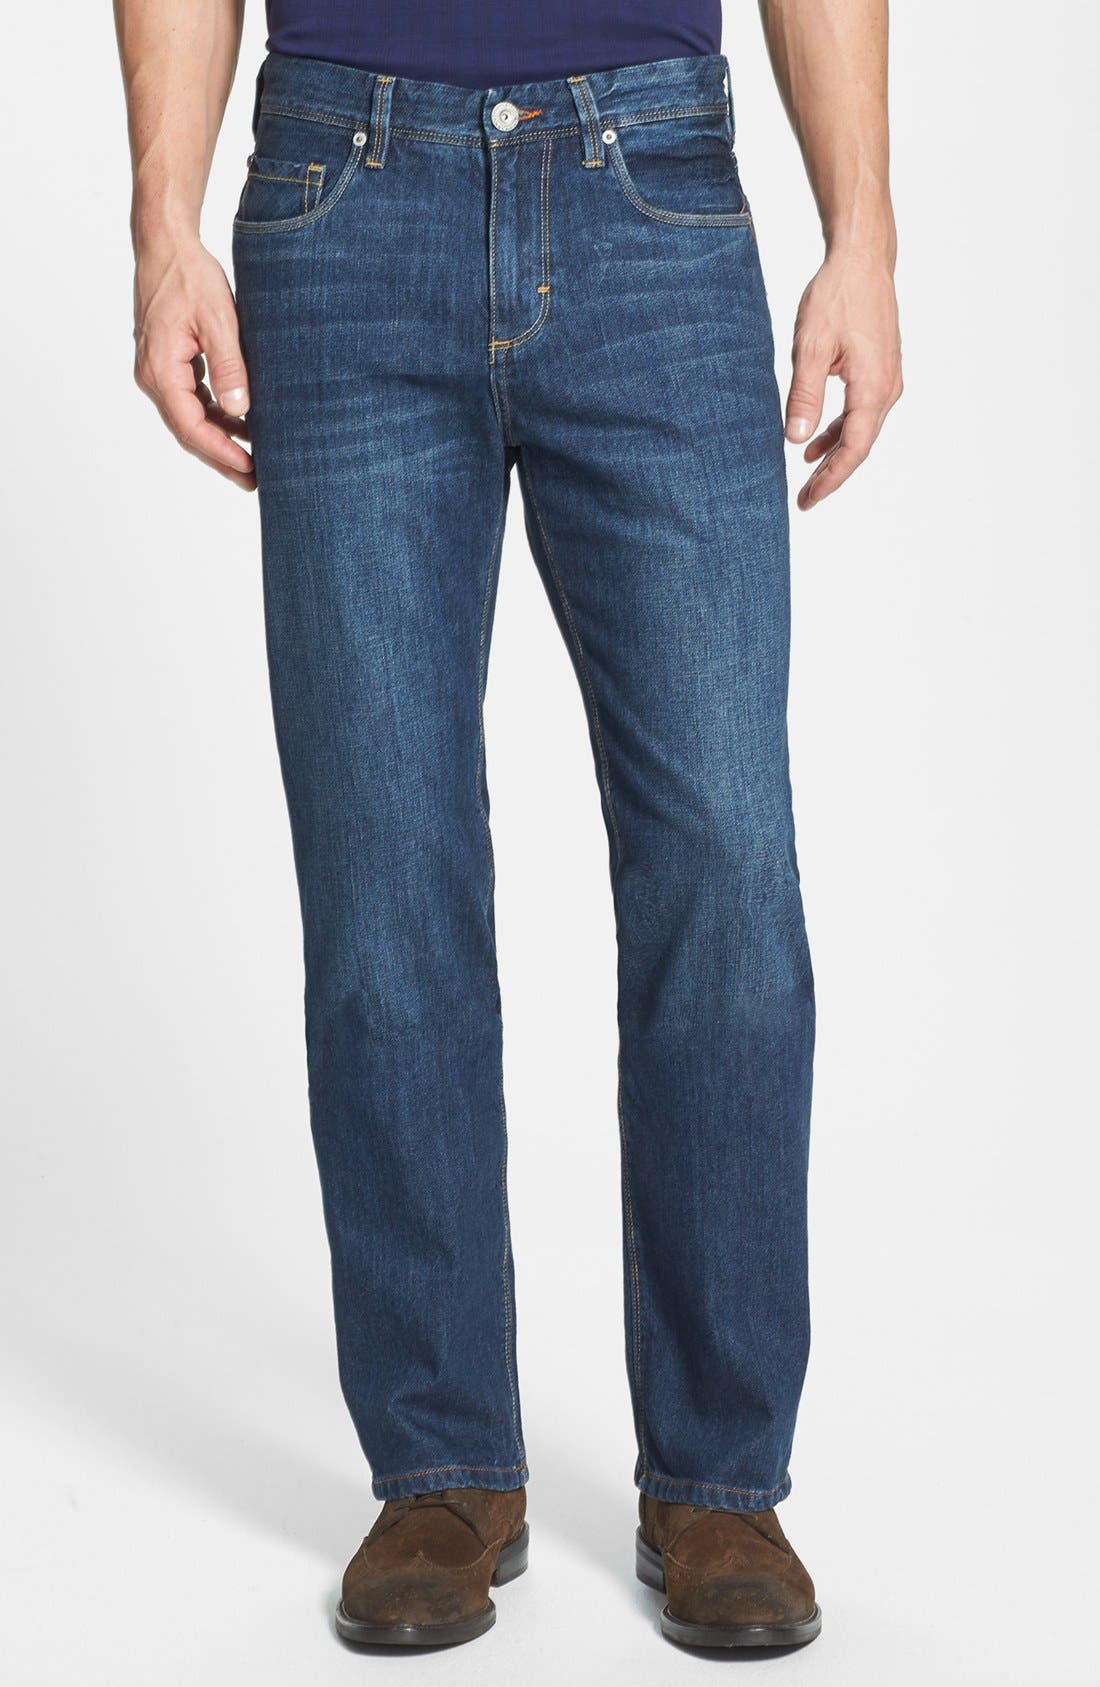 tommy bahama men's jeans